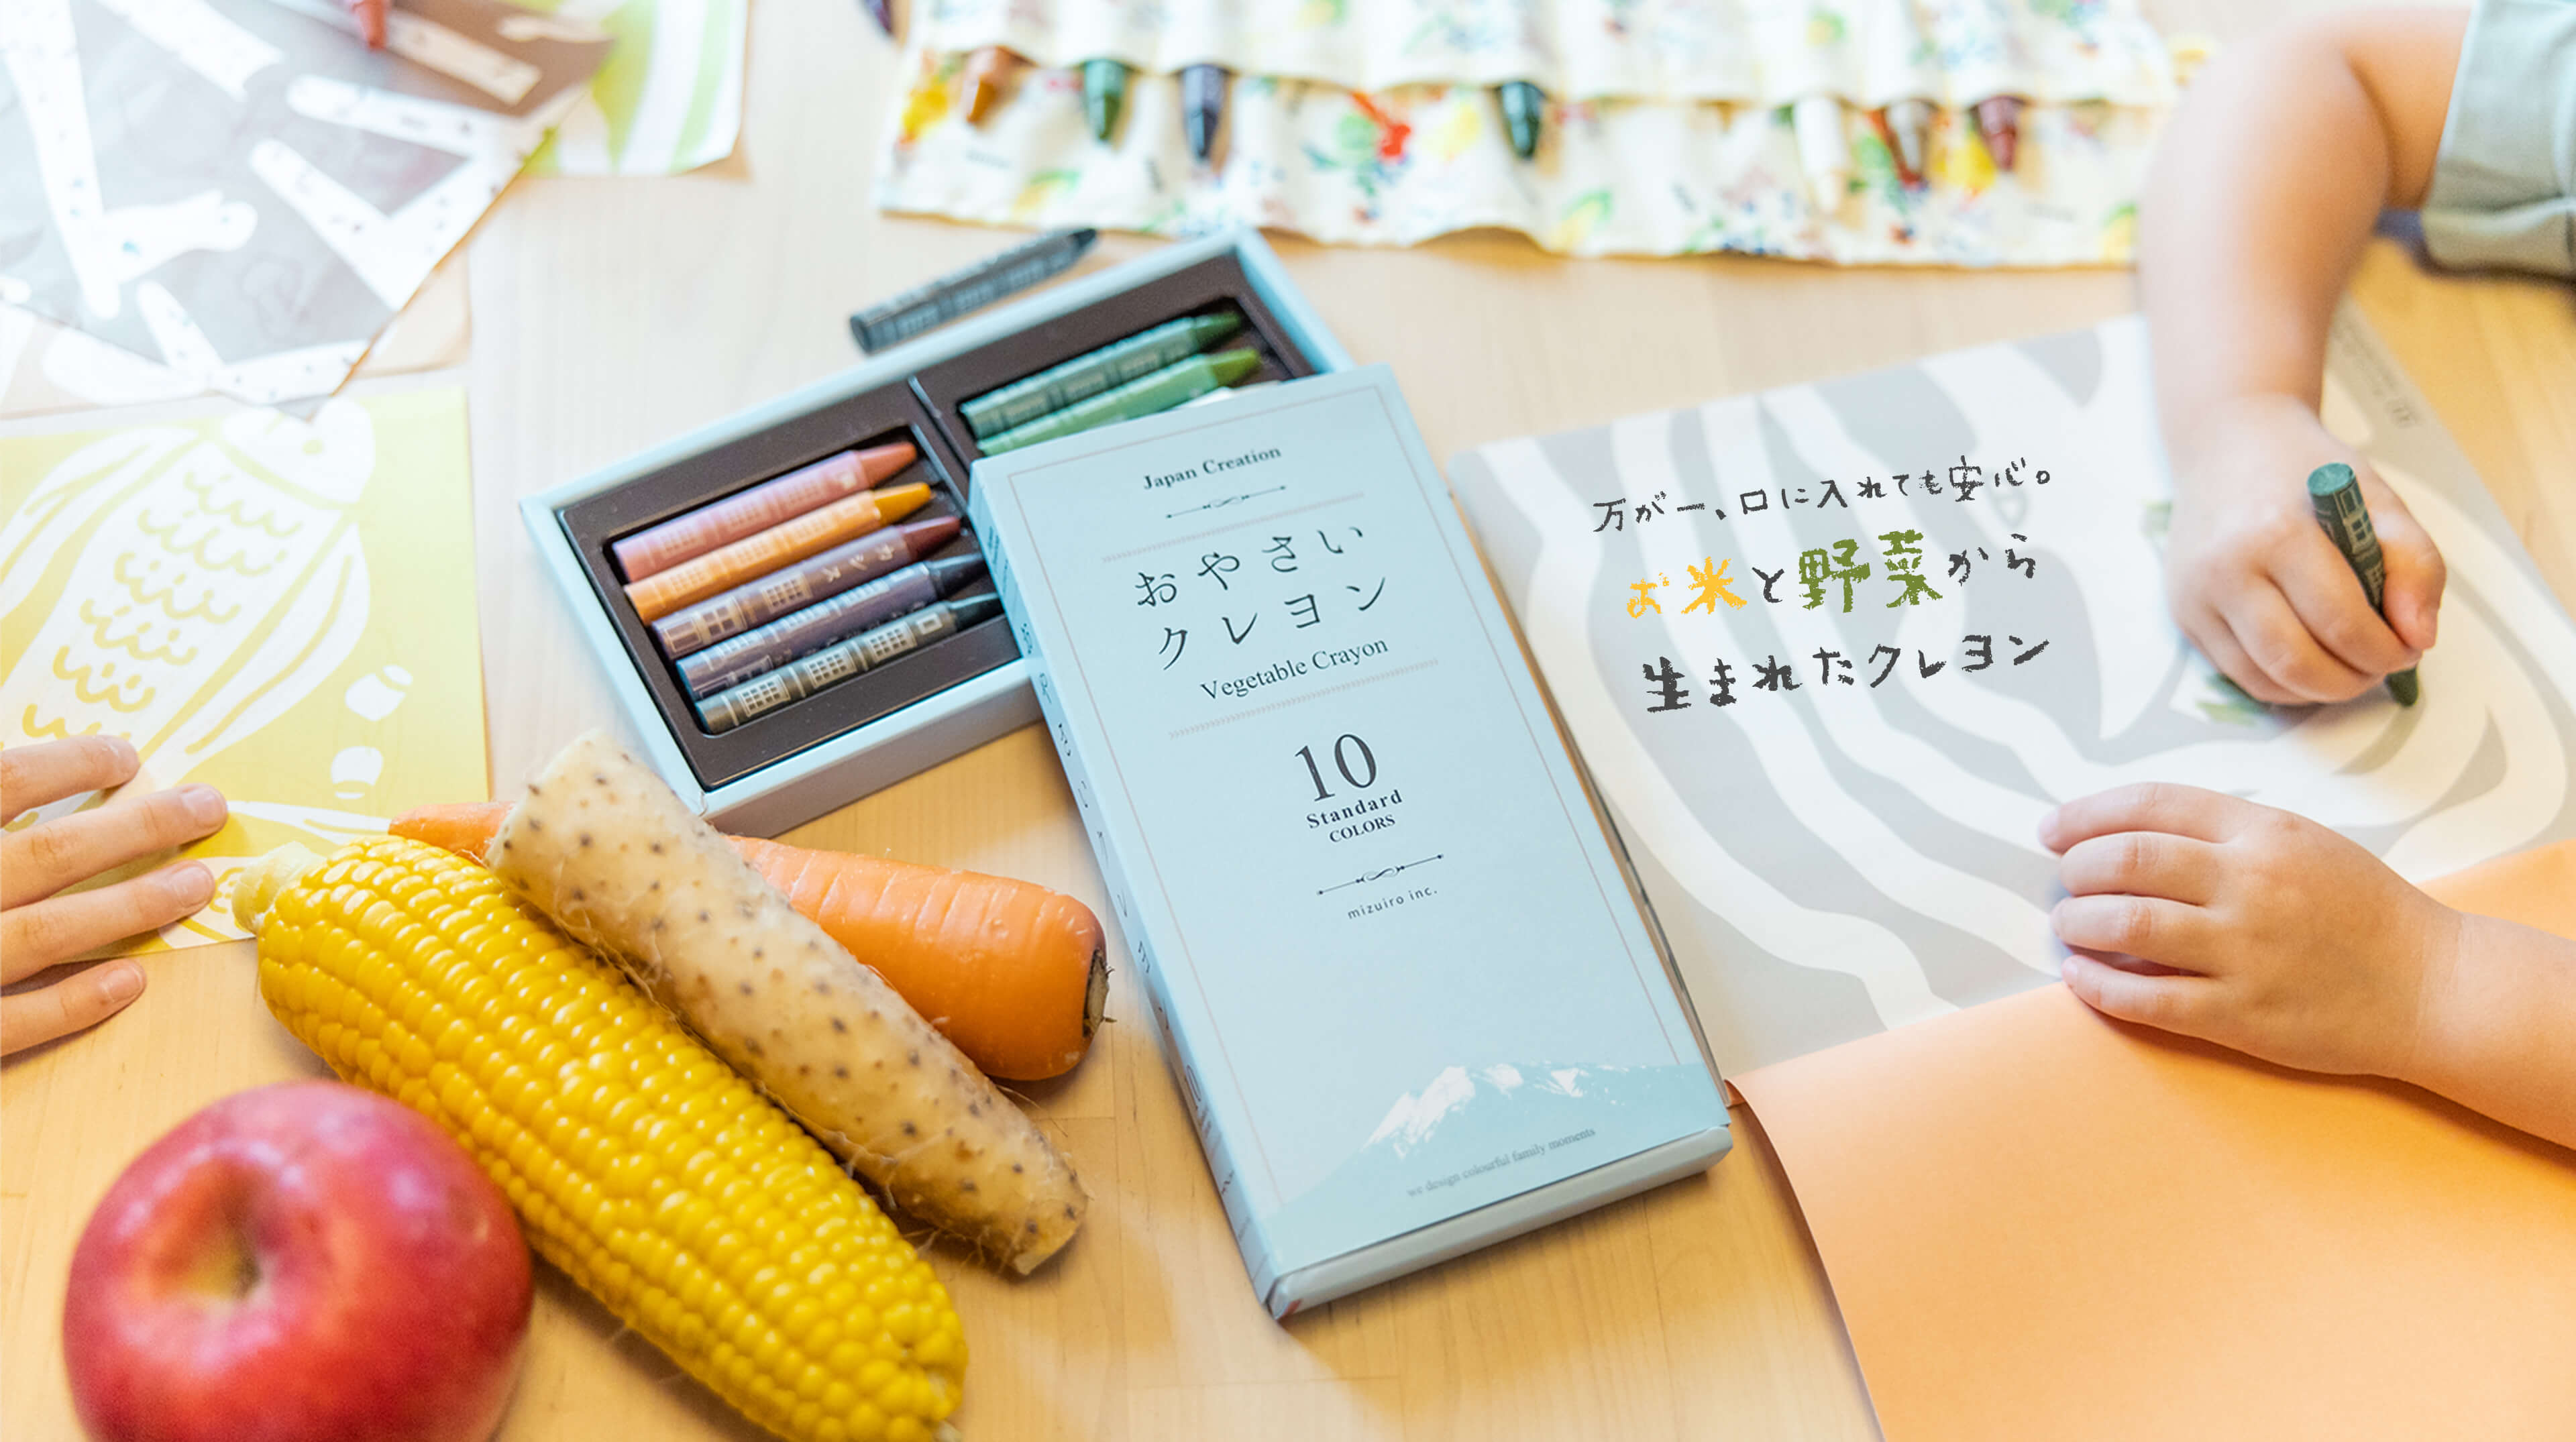 ‘Oyasai Crayons’ สีเทียนสัญชาติญี่ปุ่น ผลิตจากพืชผักผลไม้เหลือทิ้ง